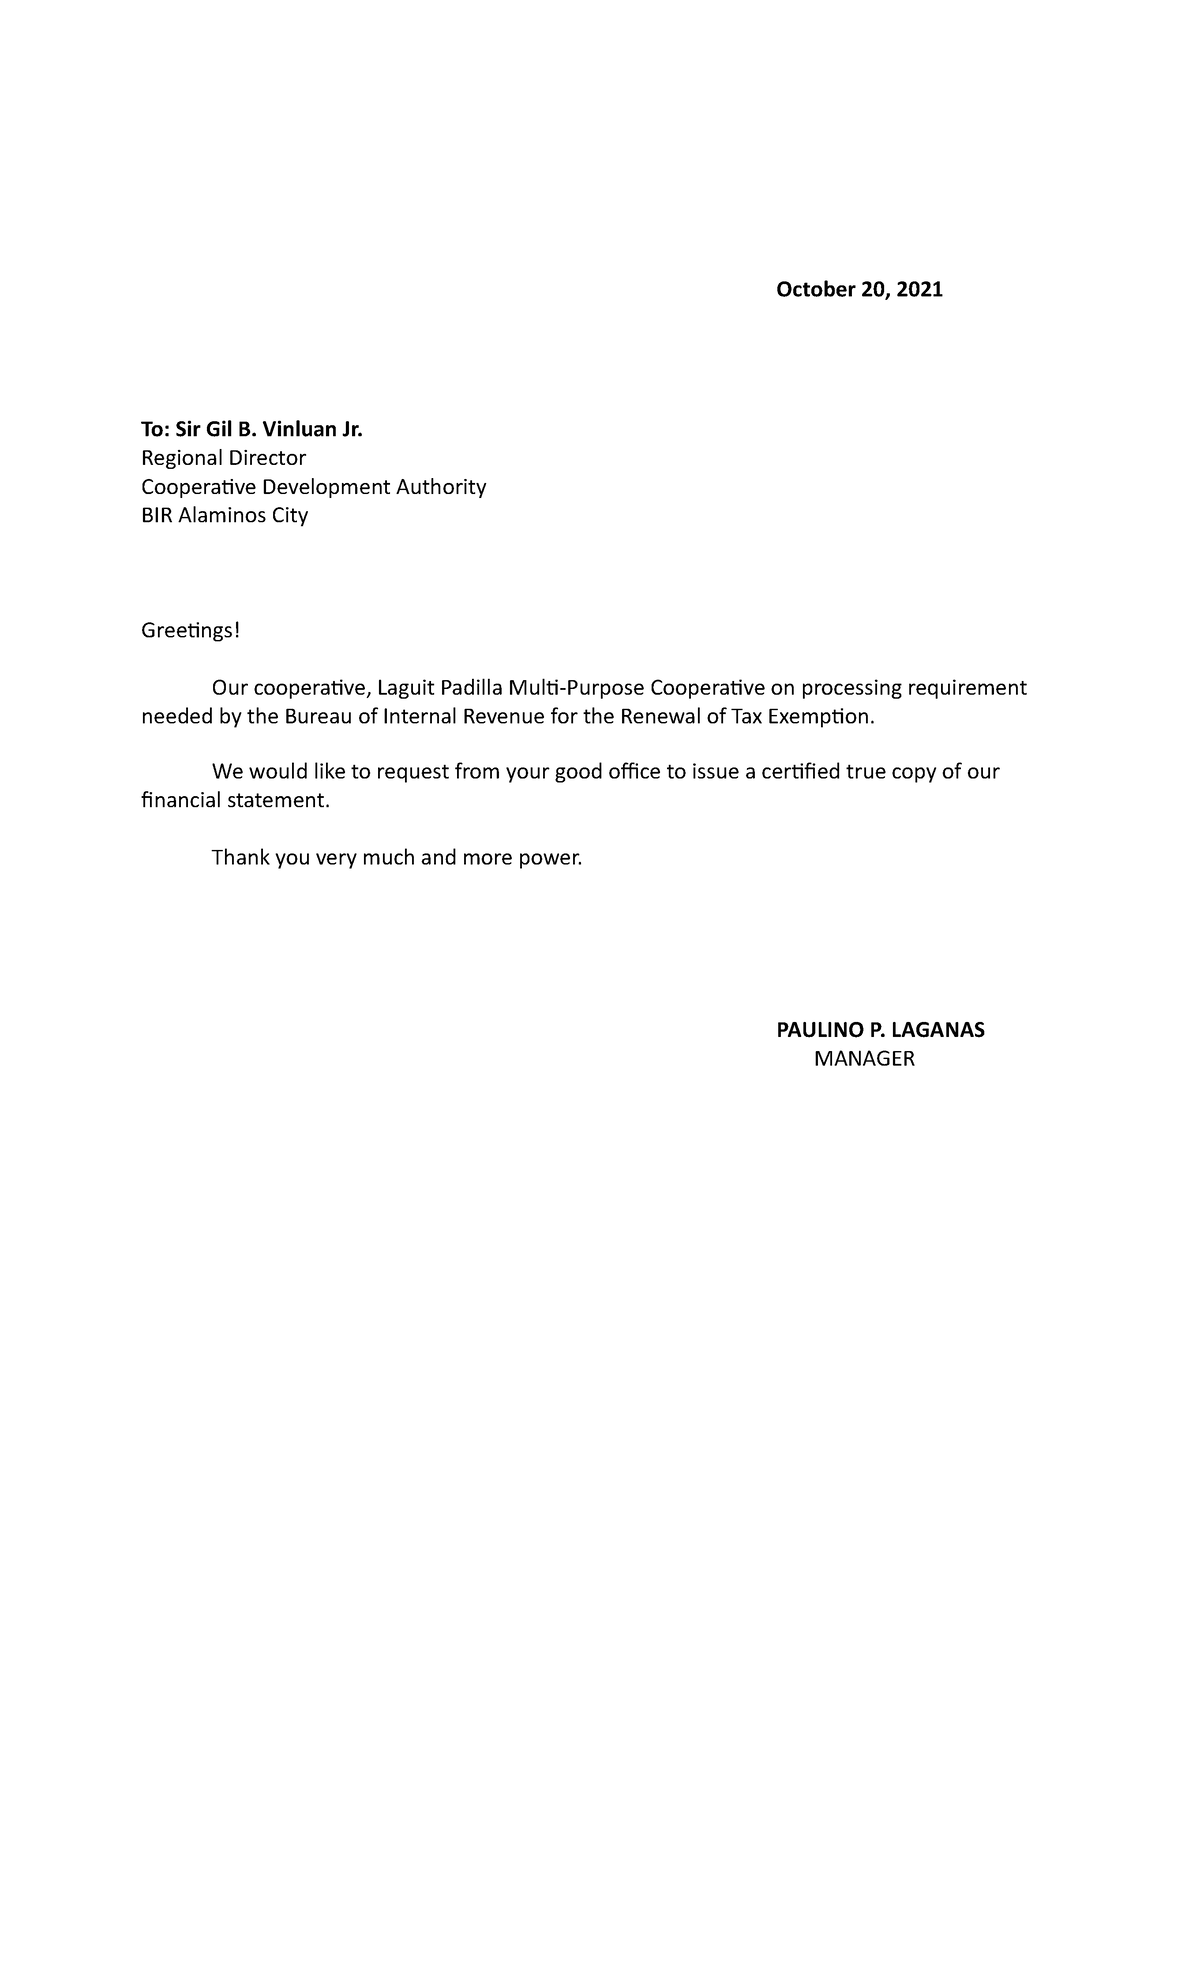 Request letter - October 20, 2021 To: Sir Gil B. Vinluan Jr. Regional ...